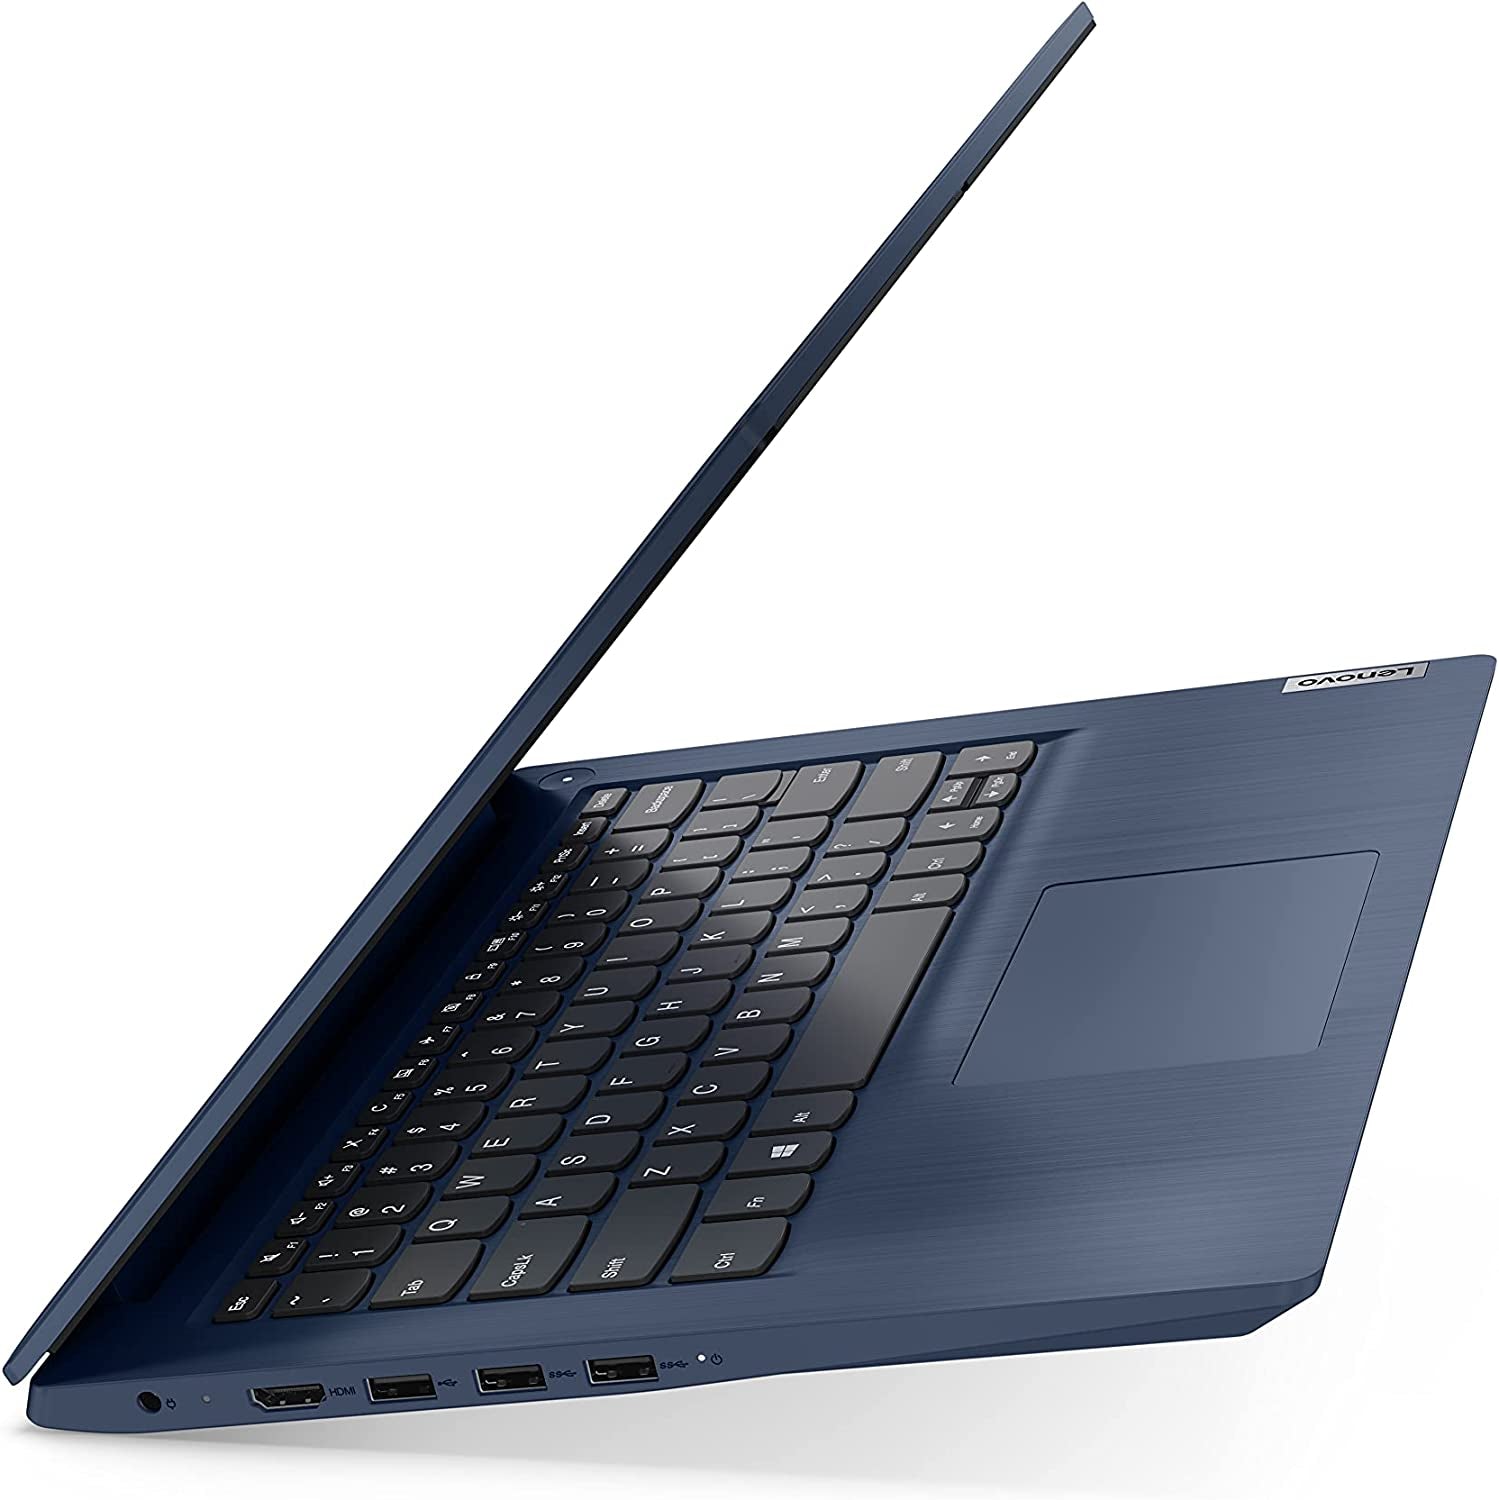 Ideapad 3 Laptop 14.0" FHD Display AMD Ryzen 5 - Everyday-Sales.com